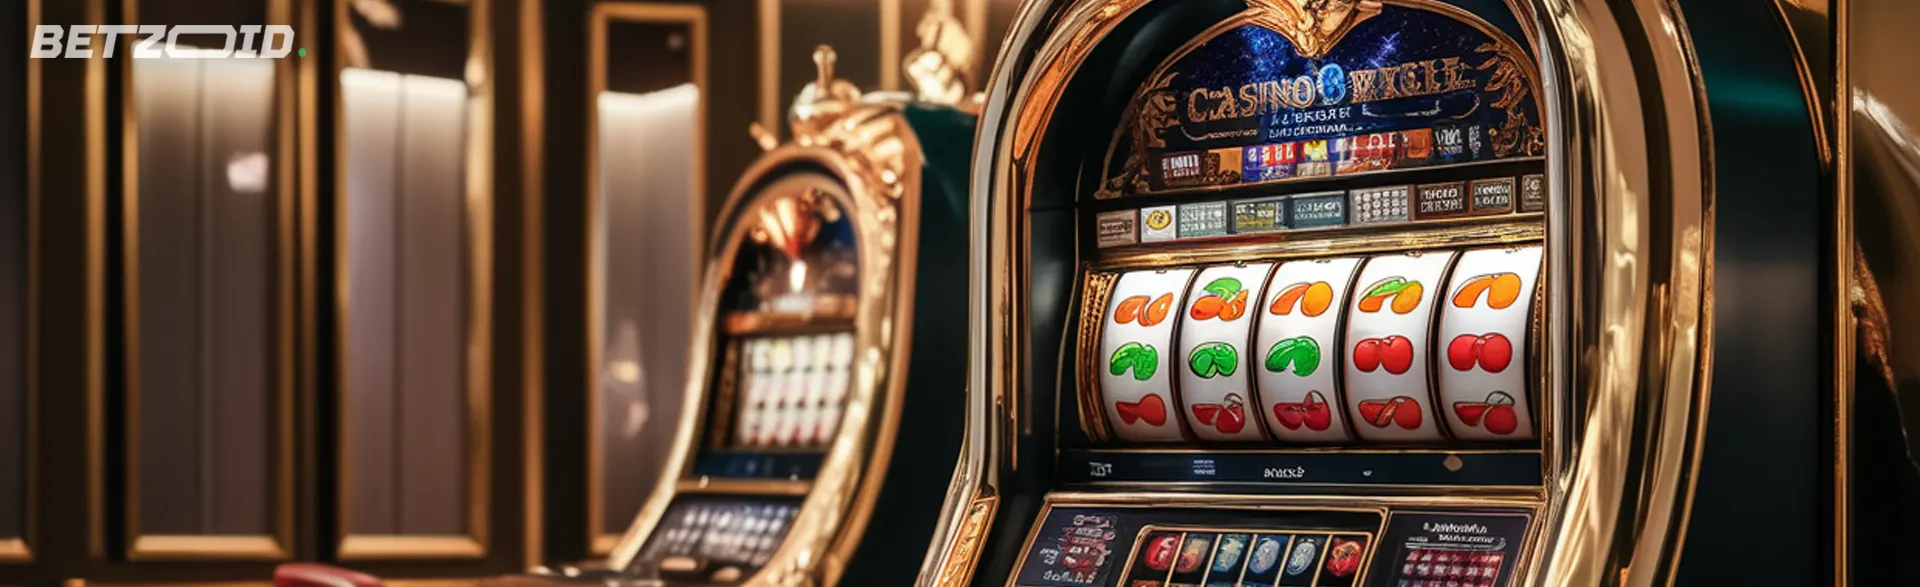 Online pokies with $5 minimum deposit in Australian casinos.